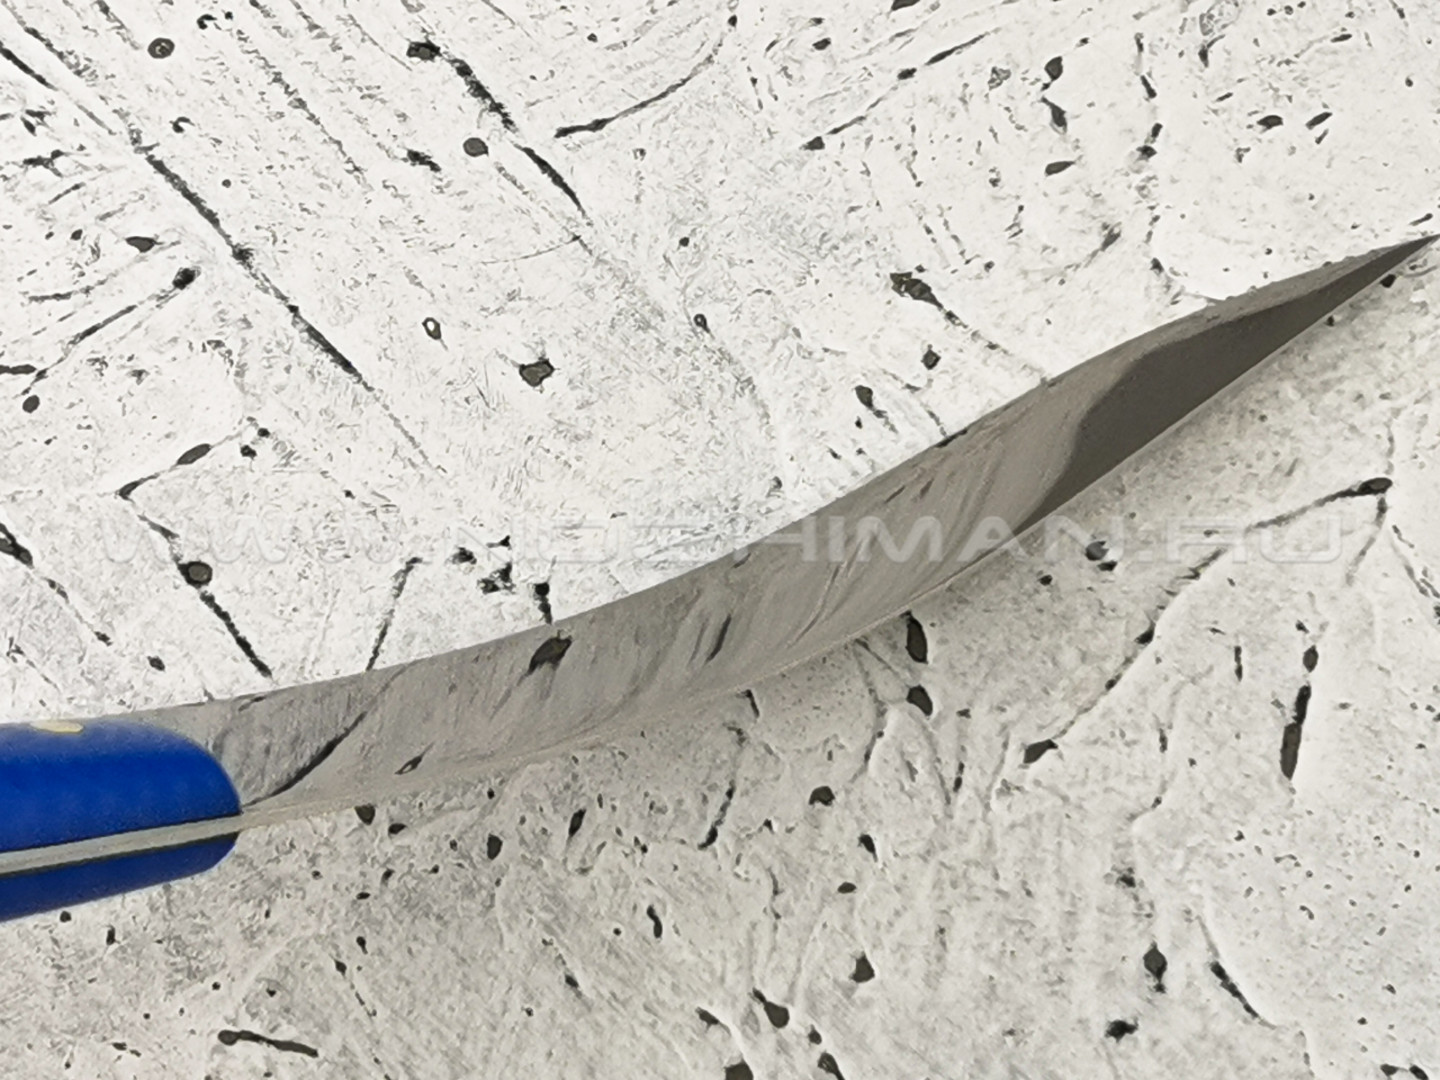 Нож "Филейный-НМ" сталь N690, рукоять G10 blue (Наследие)